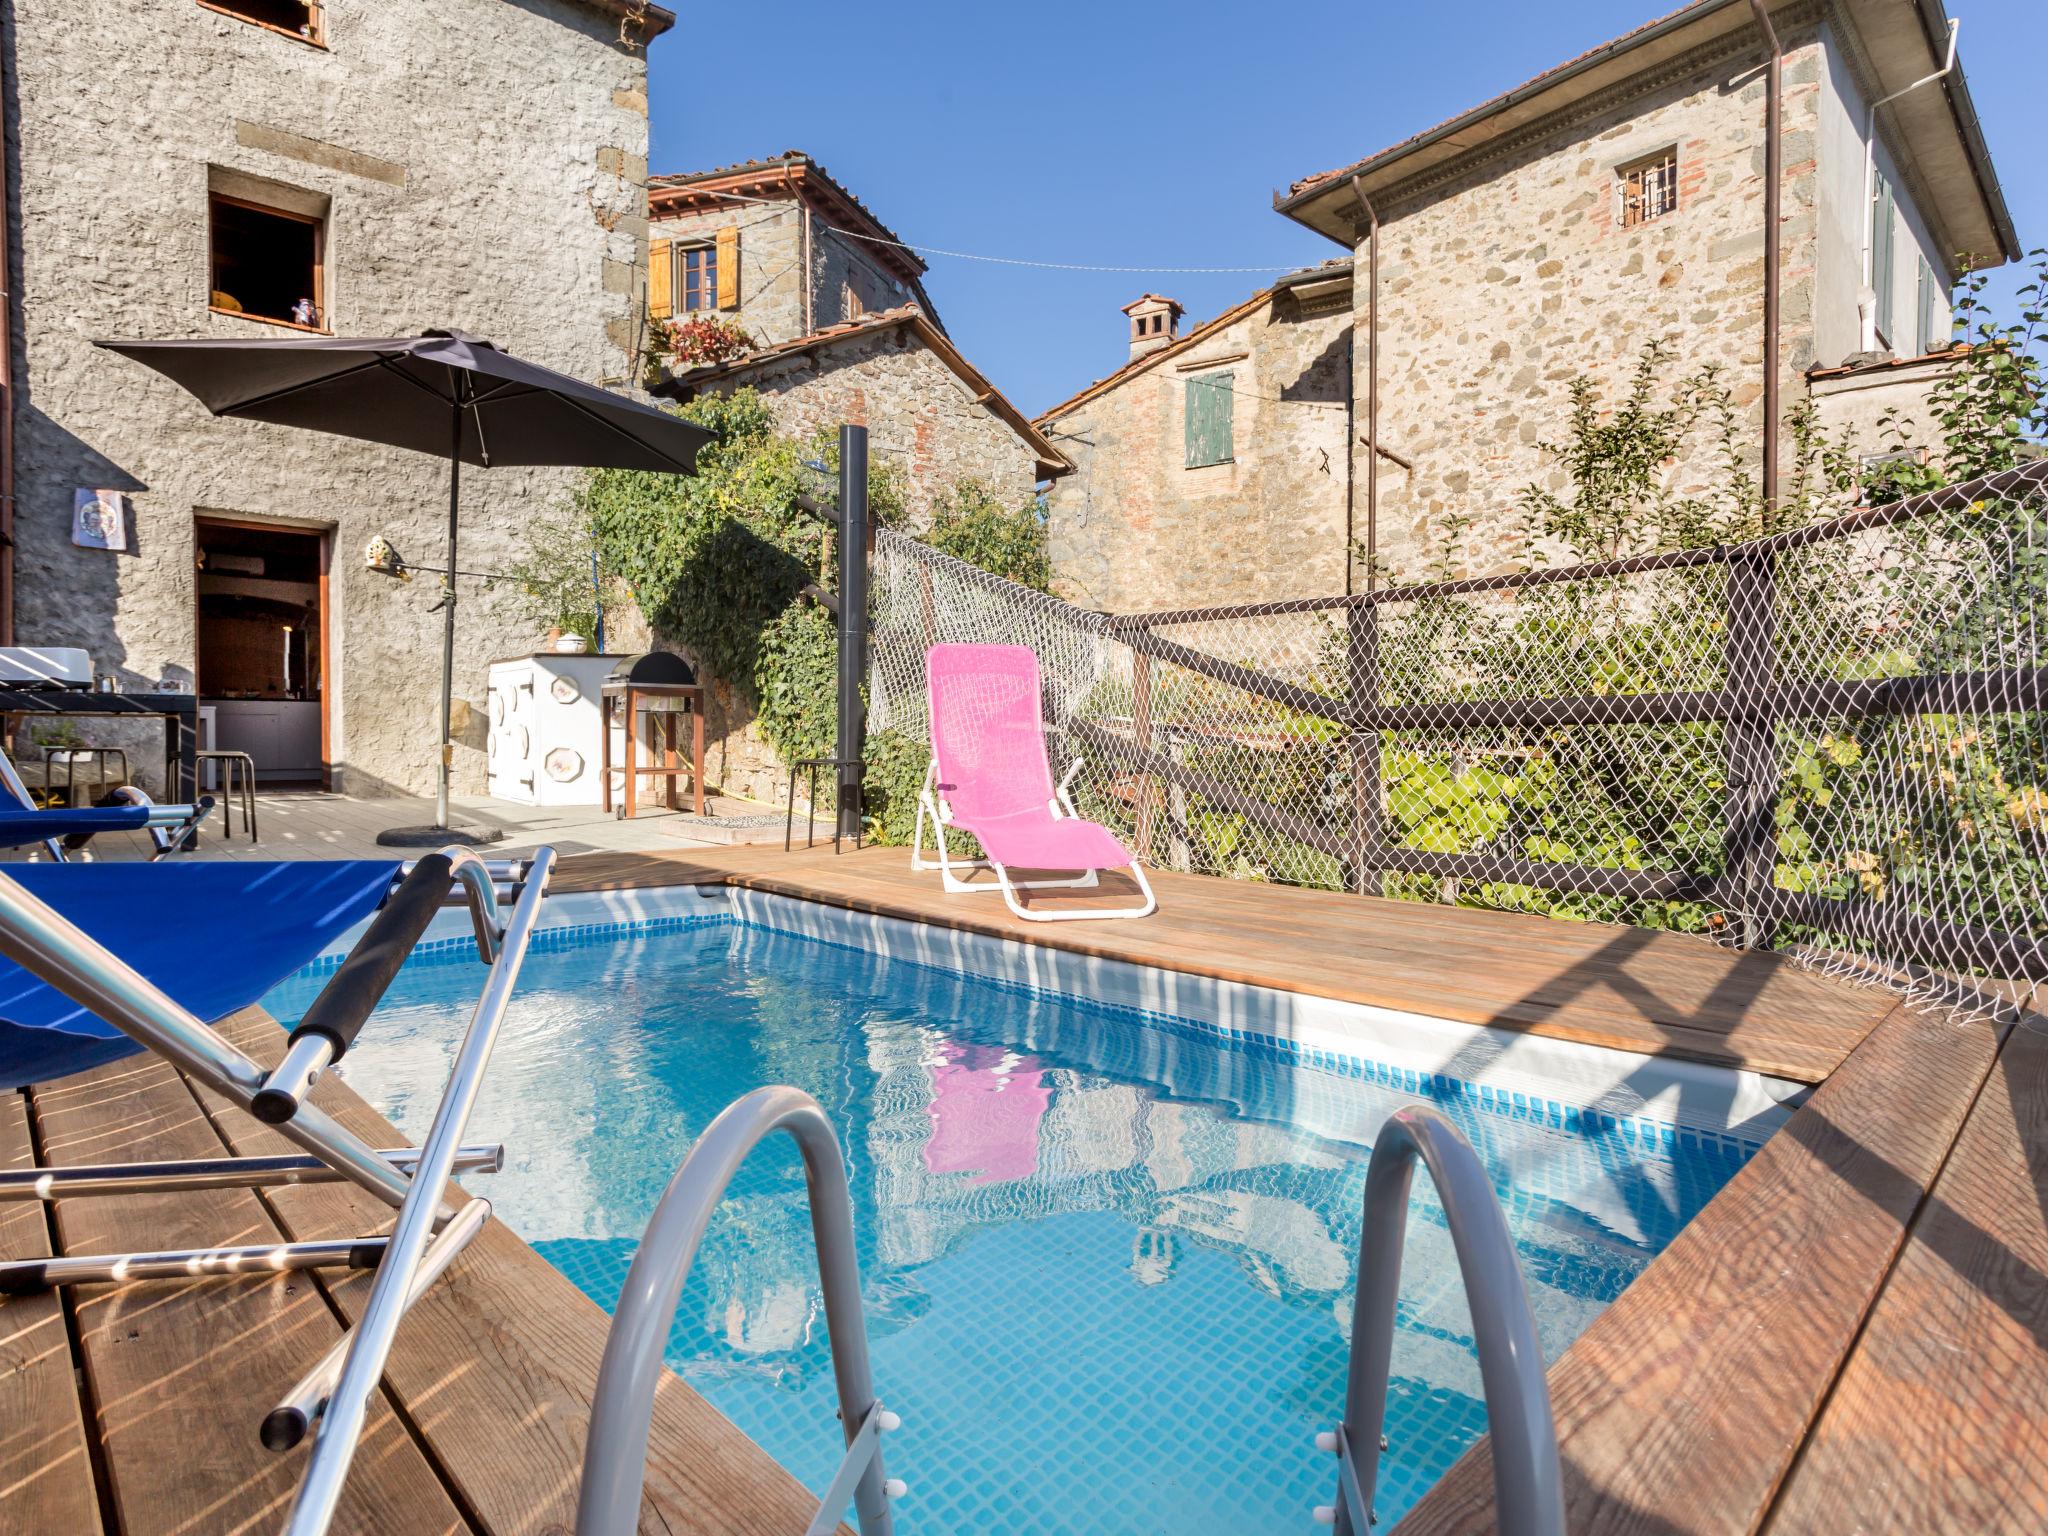 Foto 1 - Haus mit 1 Schlafzimmer in Bagni di Lucca mit privater pool und terrasse